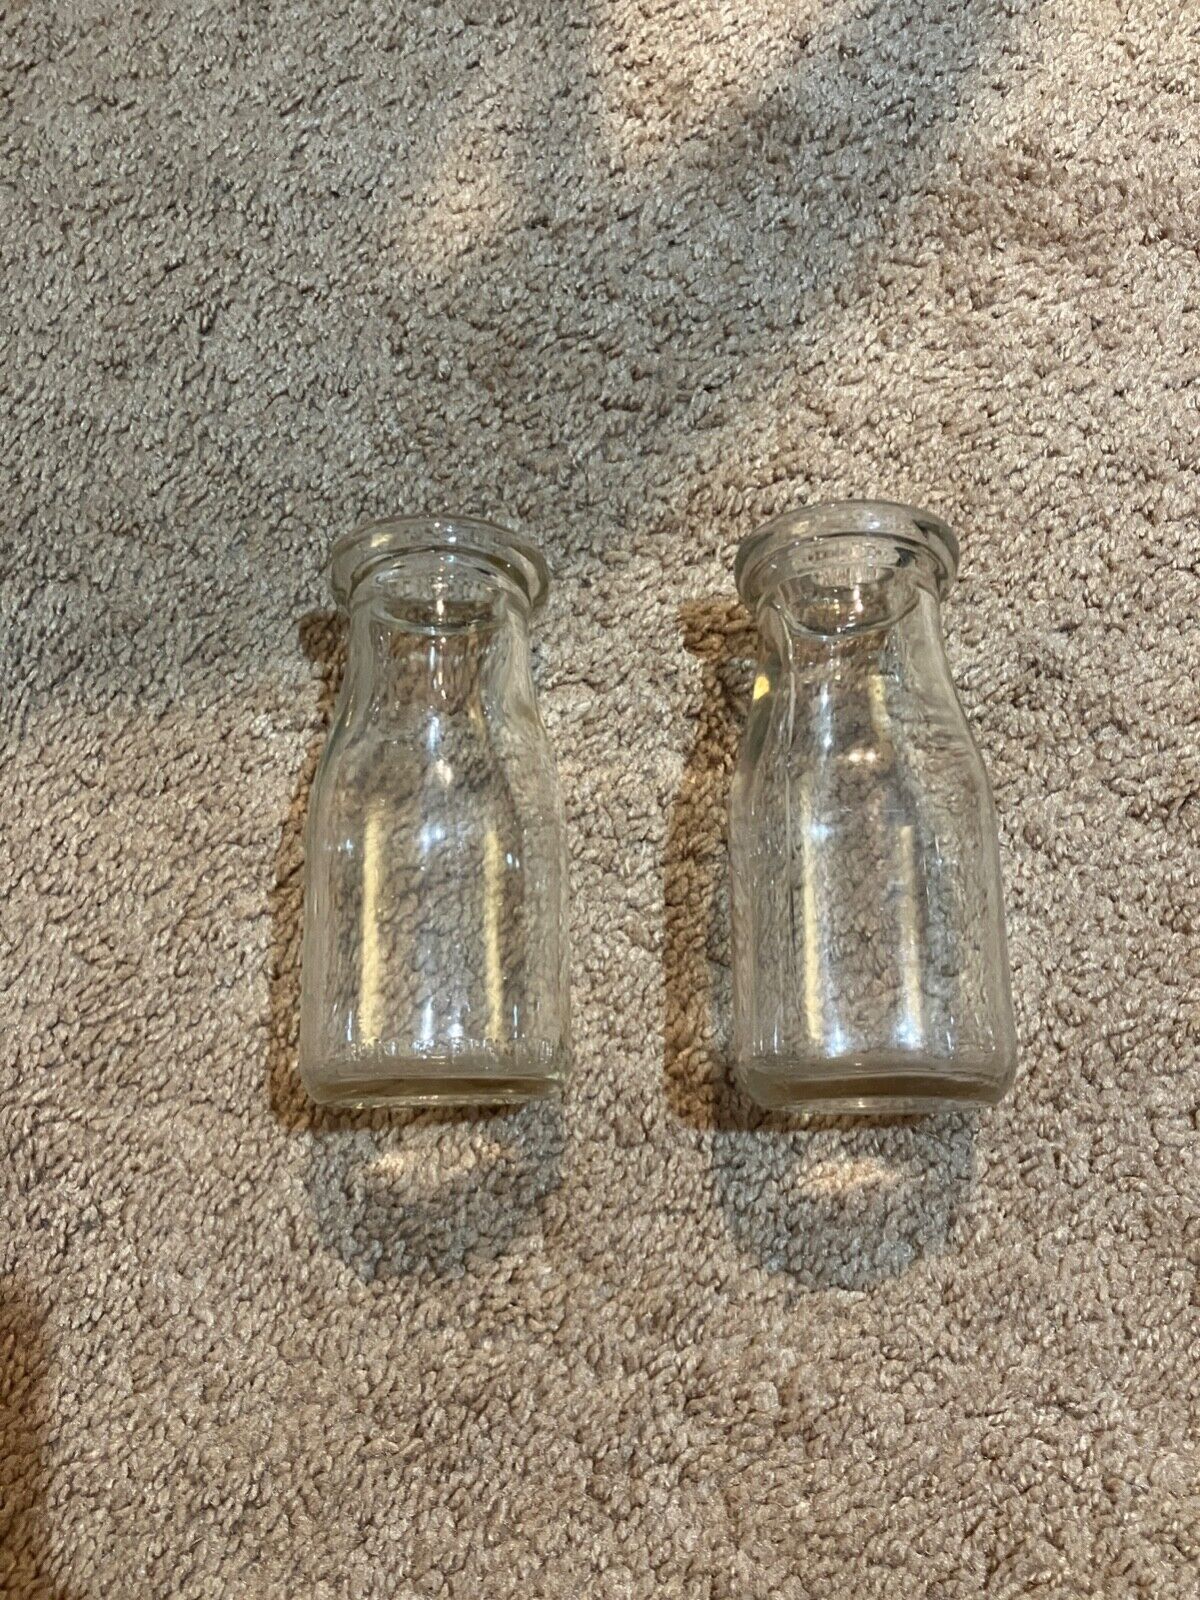 2 Vintage Glass Milk Bottles - Each one/half Pint